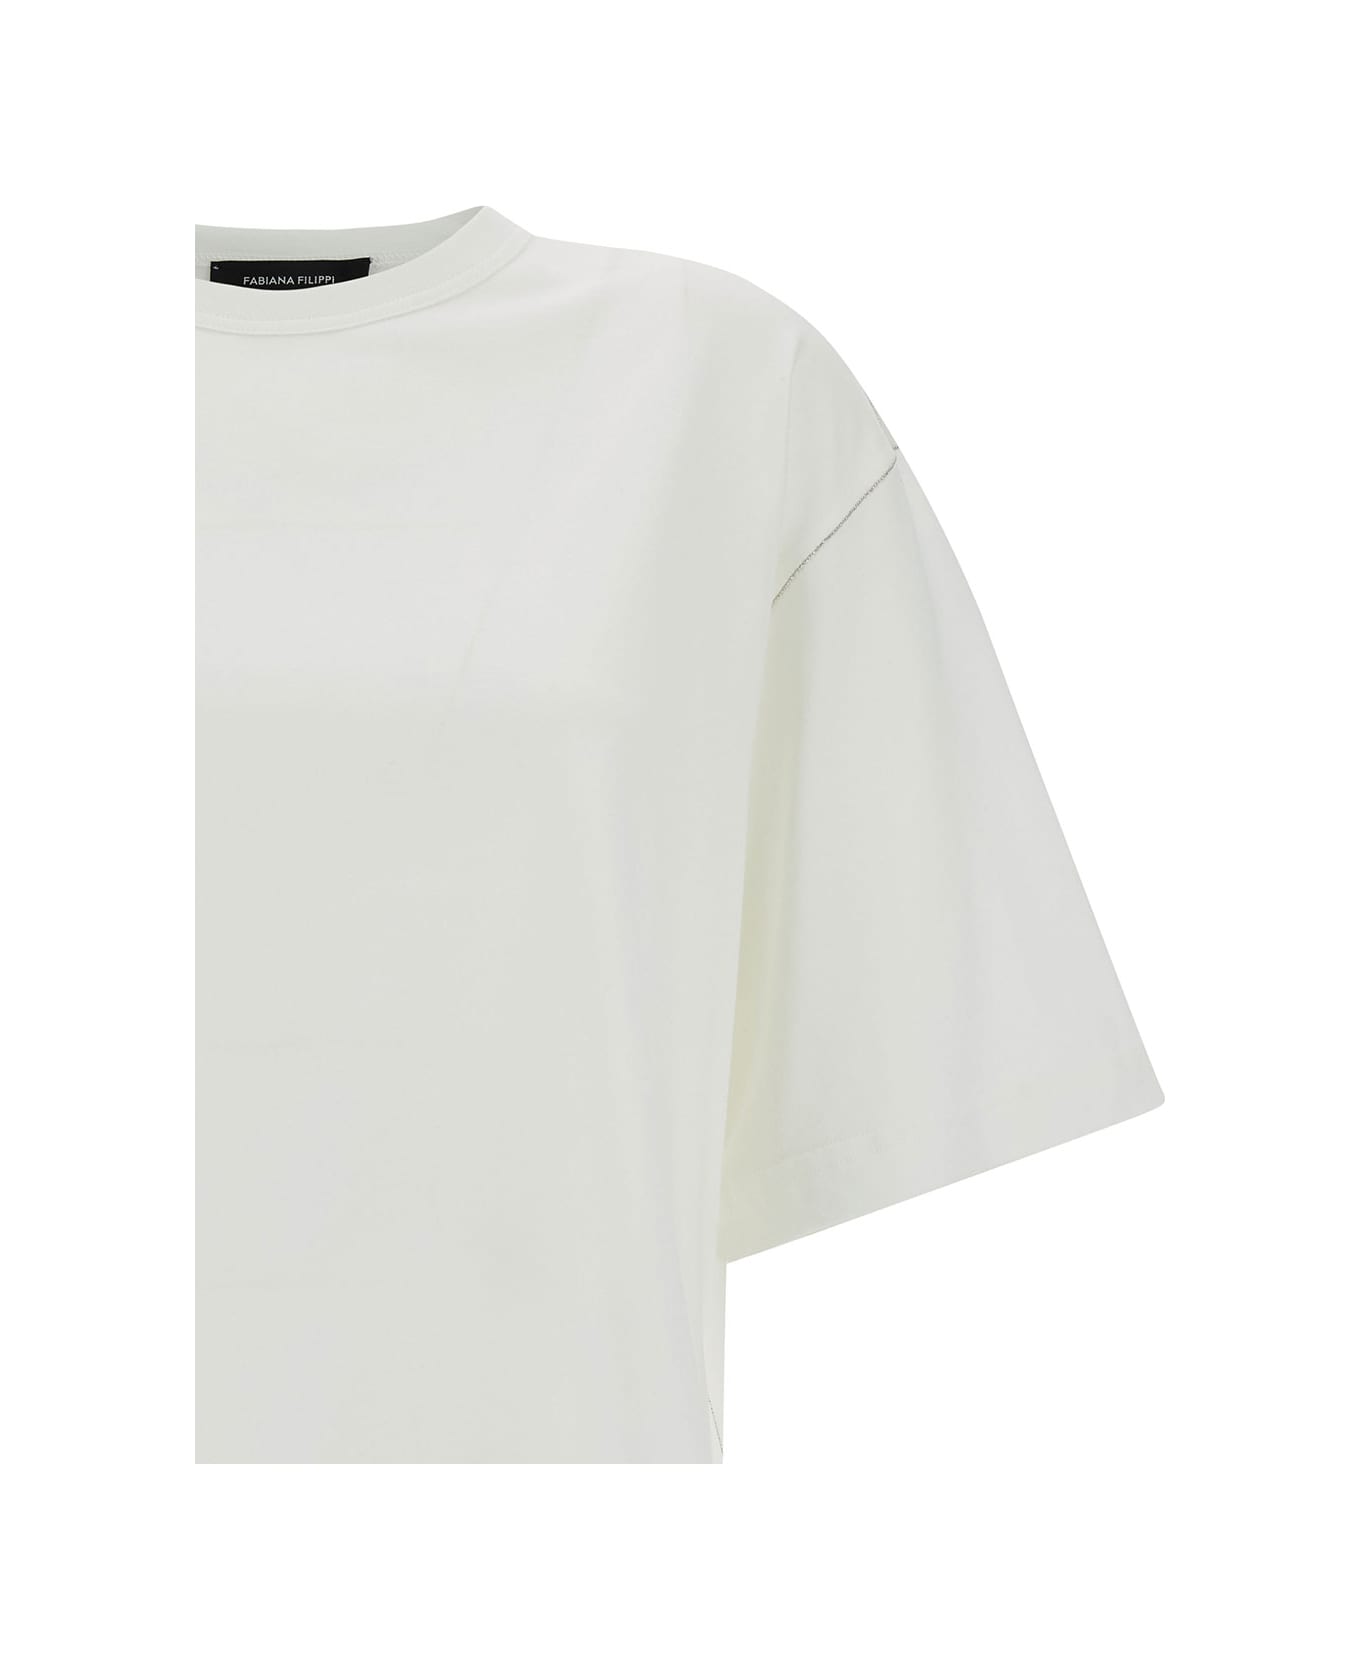 Fabiana Filippi Oversized White Crewneck T-shirt In Cotton Woman - White